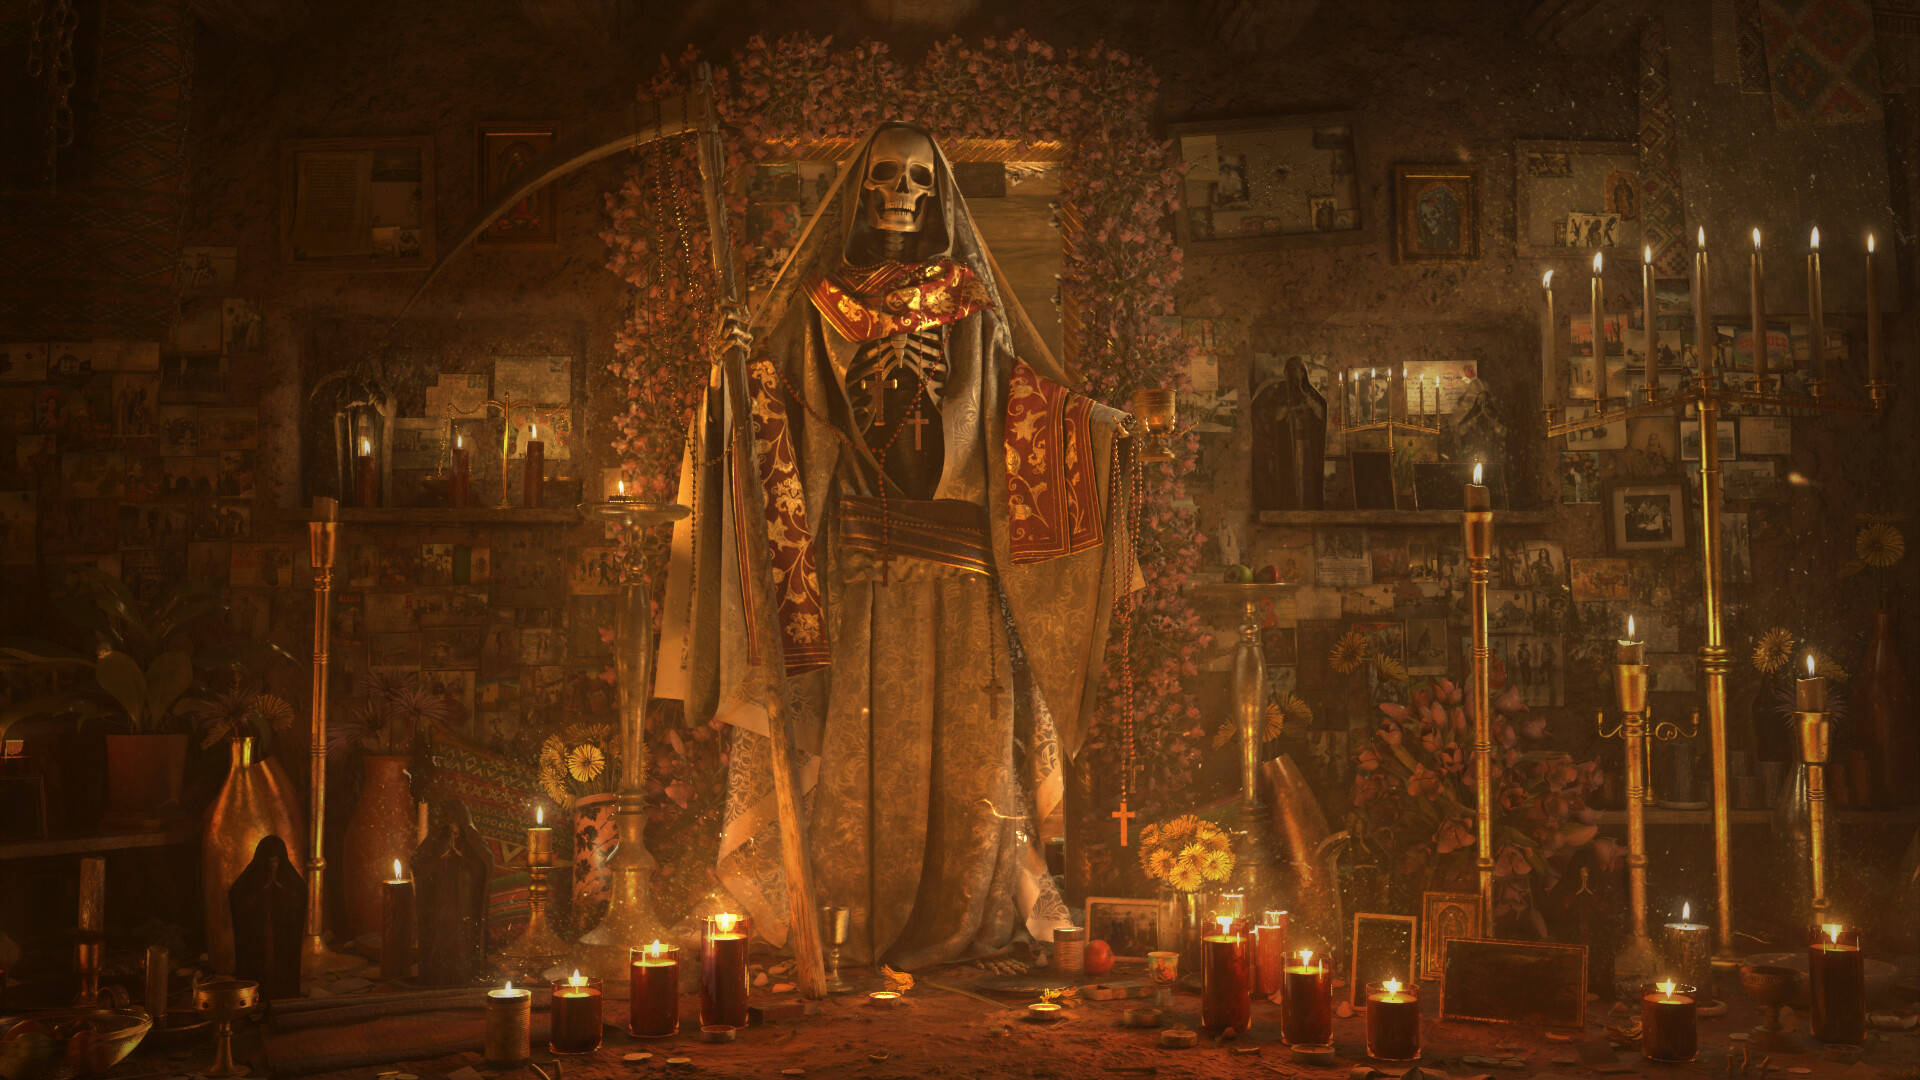 La Santa Muerte wallpaper by Espiritu1417Maligno  Download on ZEDGE  8623